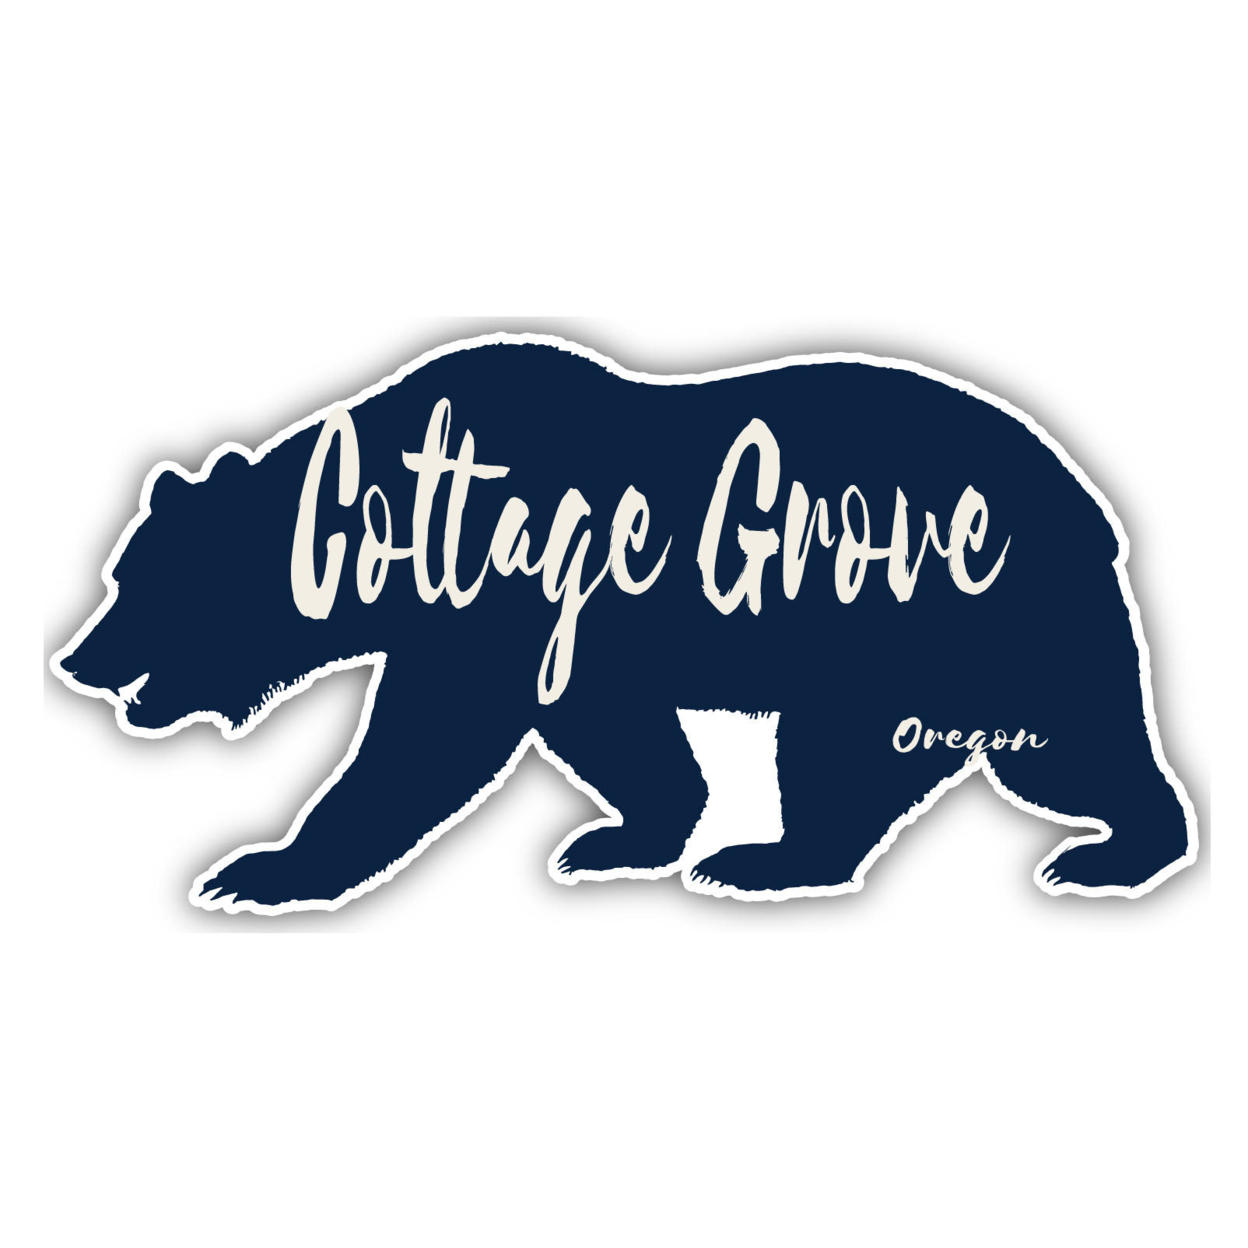 Cottage Grove Oregon Souvenir Decorative Stickers (Choose Theme And Size) - 4-Pack, 2-Inch, Tent